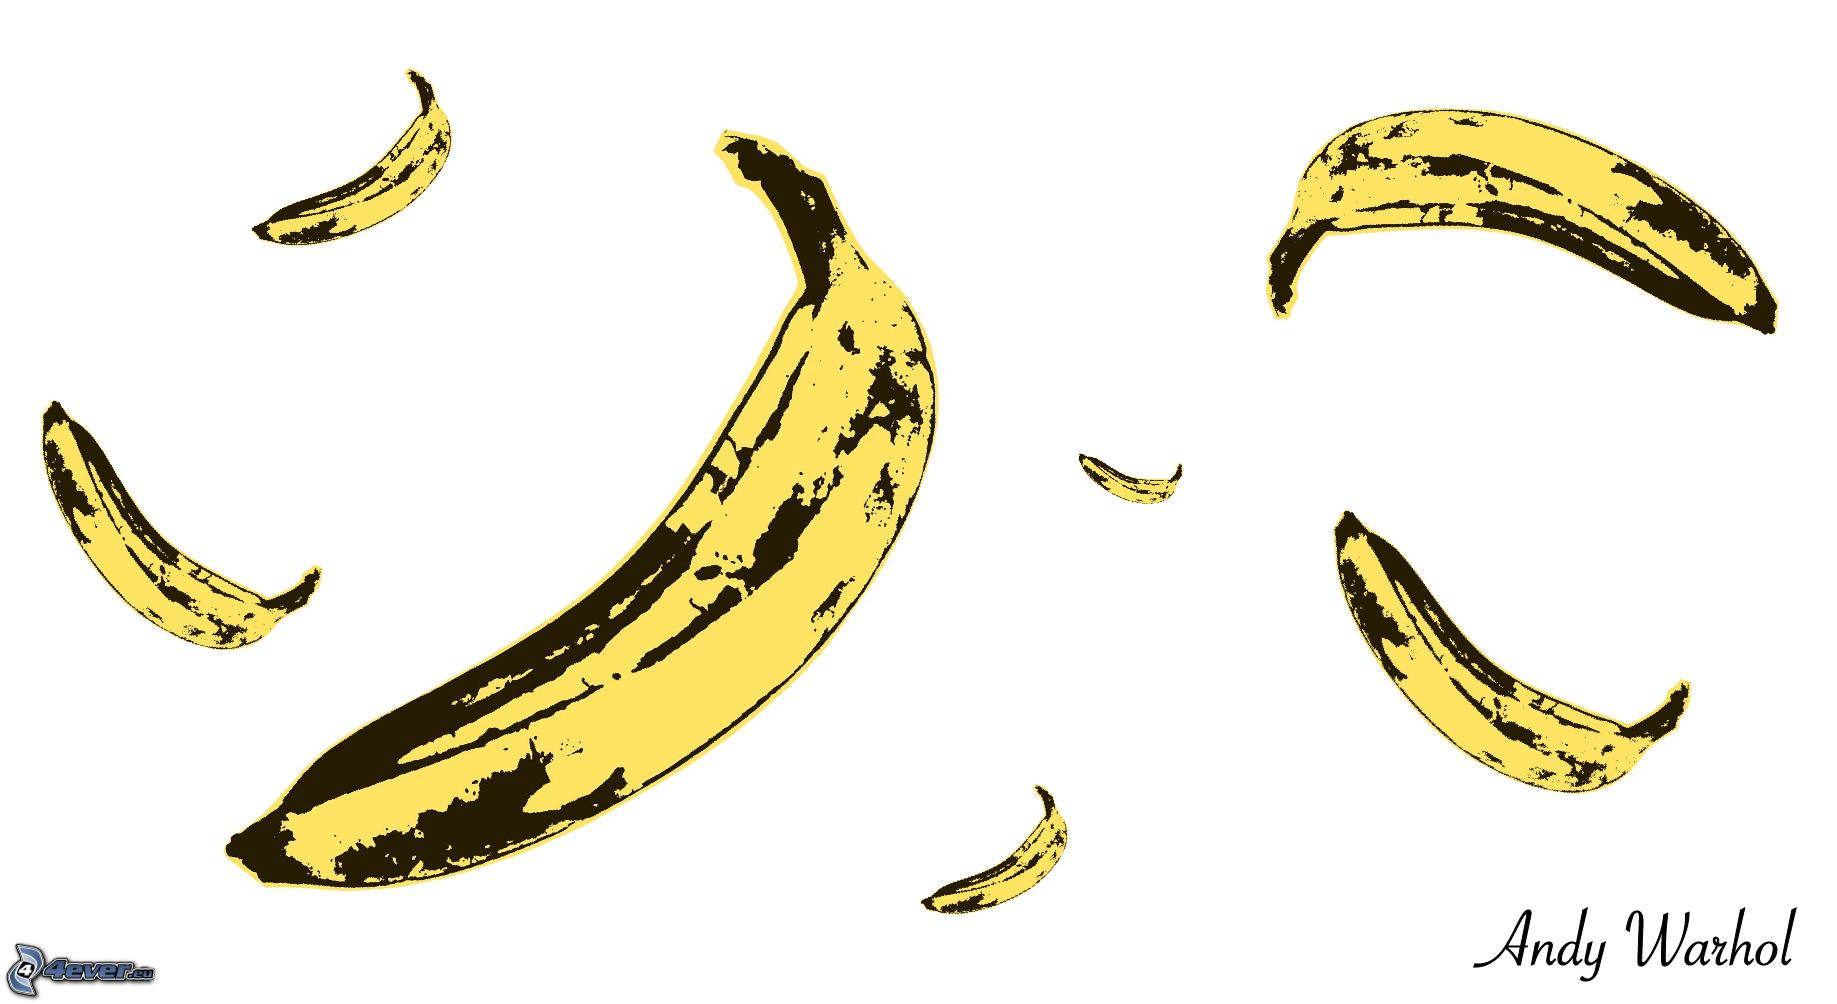 Free Download Best Andy Warhol Banana Wallpaper Hd Photo Galeries Art Design 17x1004 For Your Desktop Mobile Tablet Explore 48 Andy Warhol Wallpaper For Sale Andy Warhol Wallpapers Andy